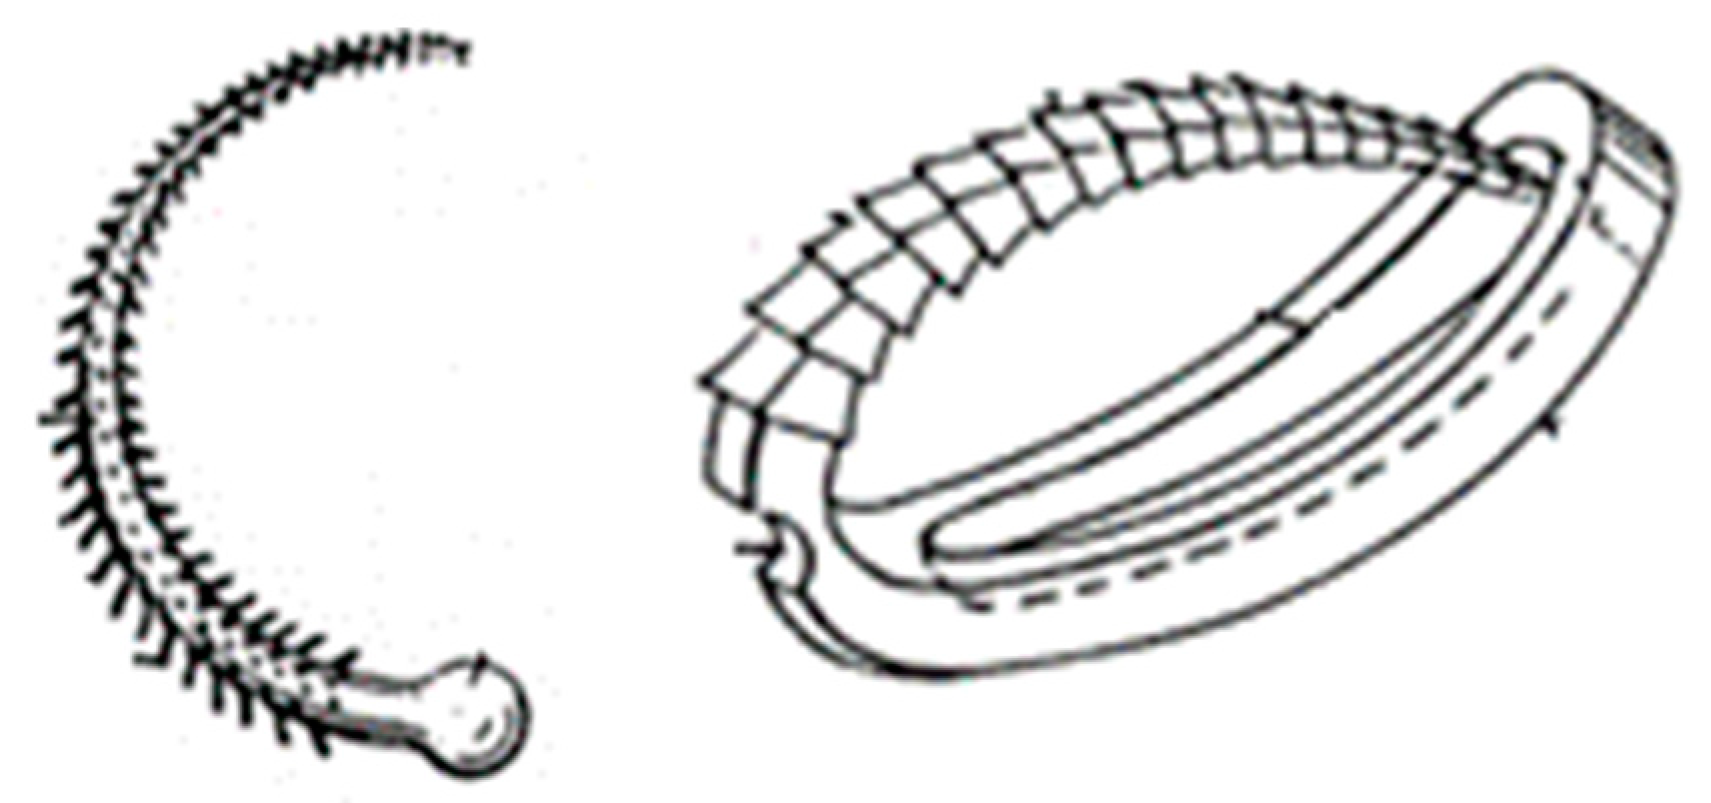 STRATAFIX Spiral Bidirectional Regular and Dual Layer Closure